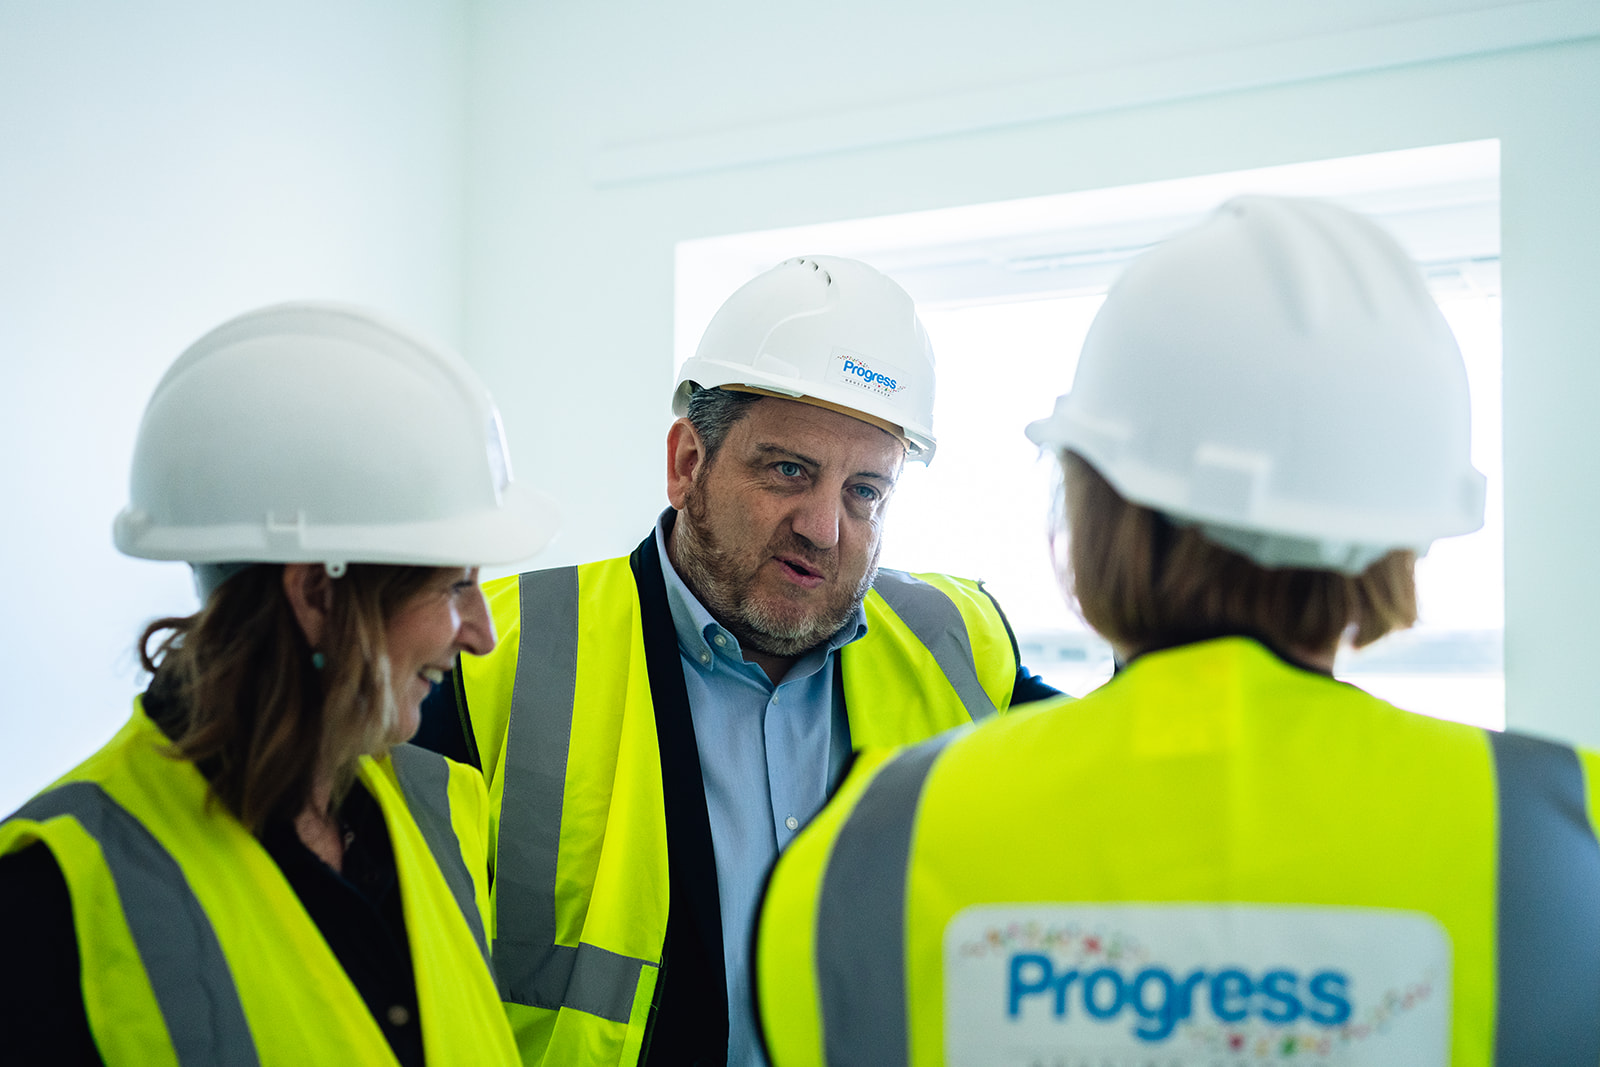 Progress employees inspecting a new development